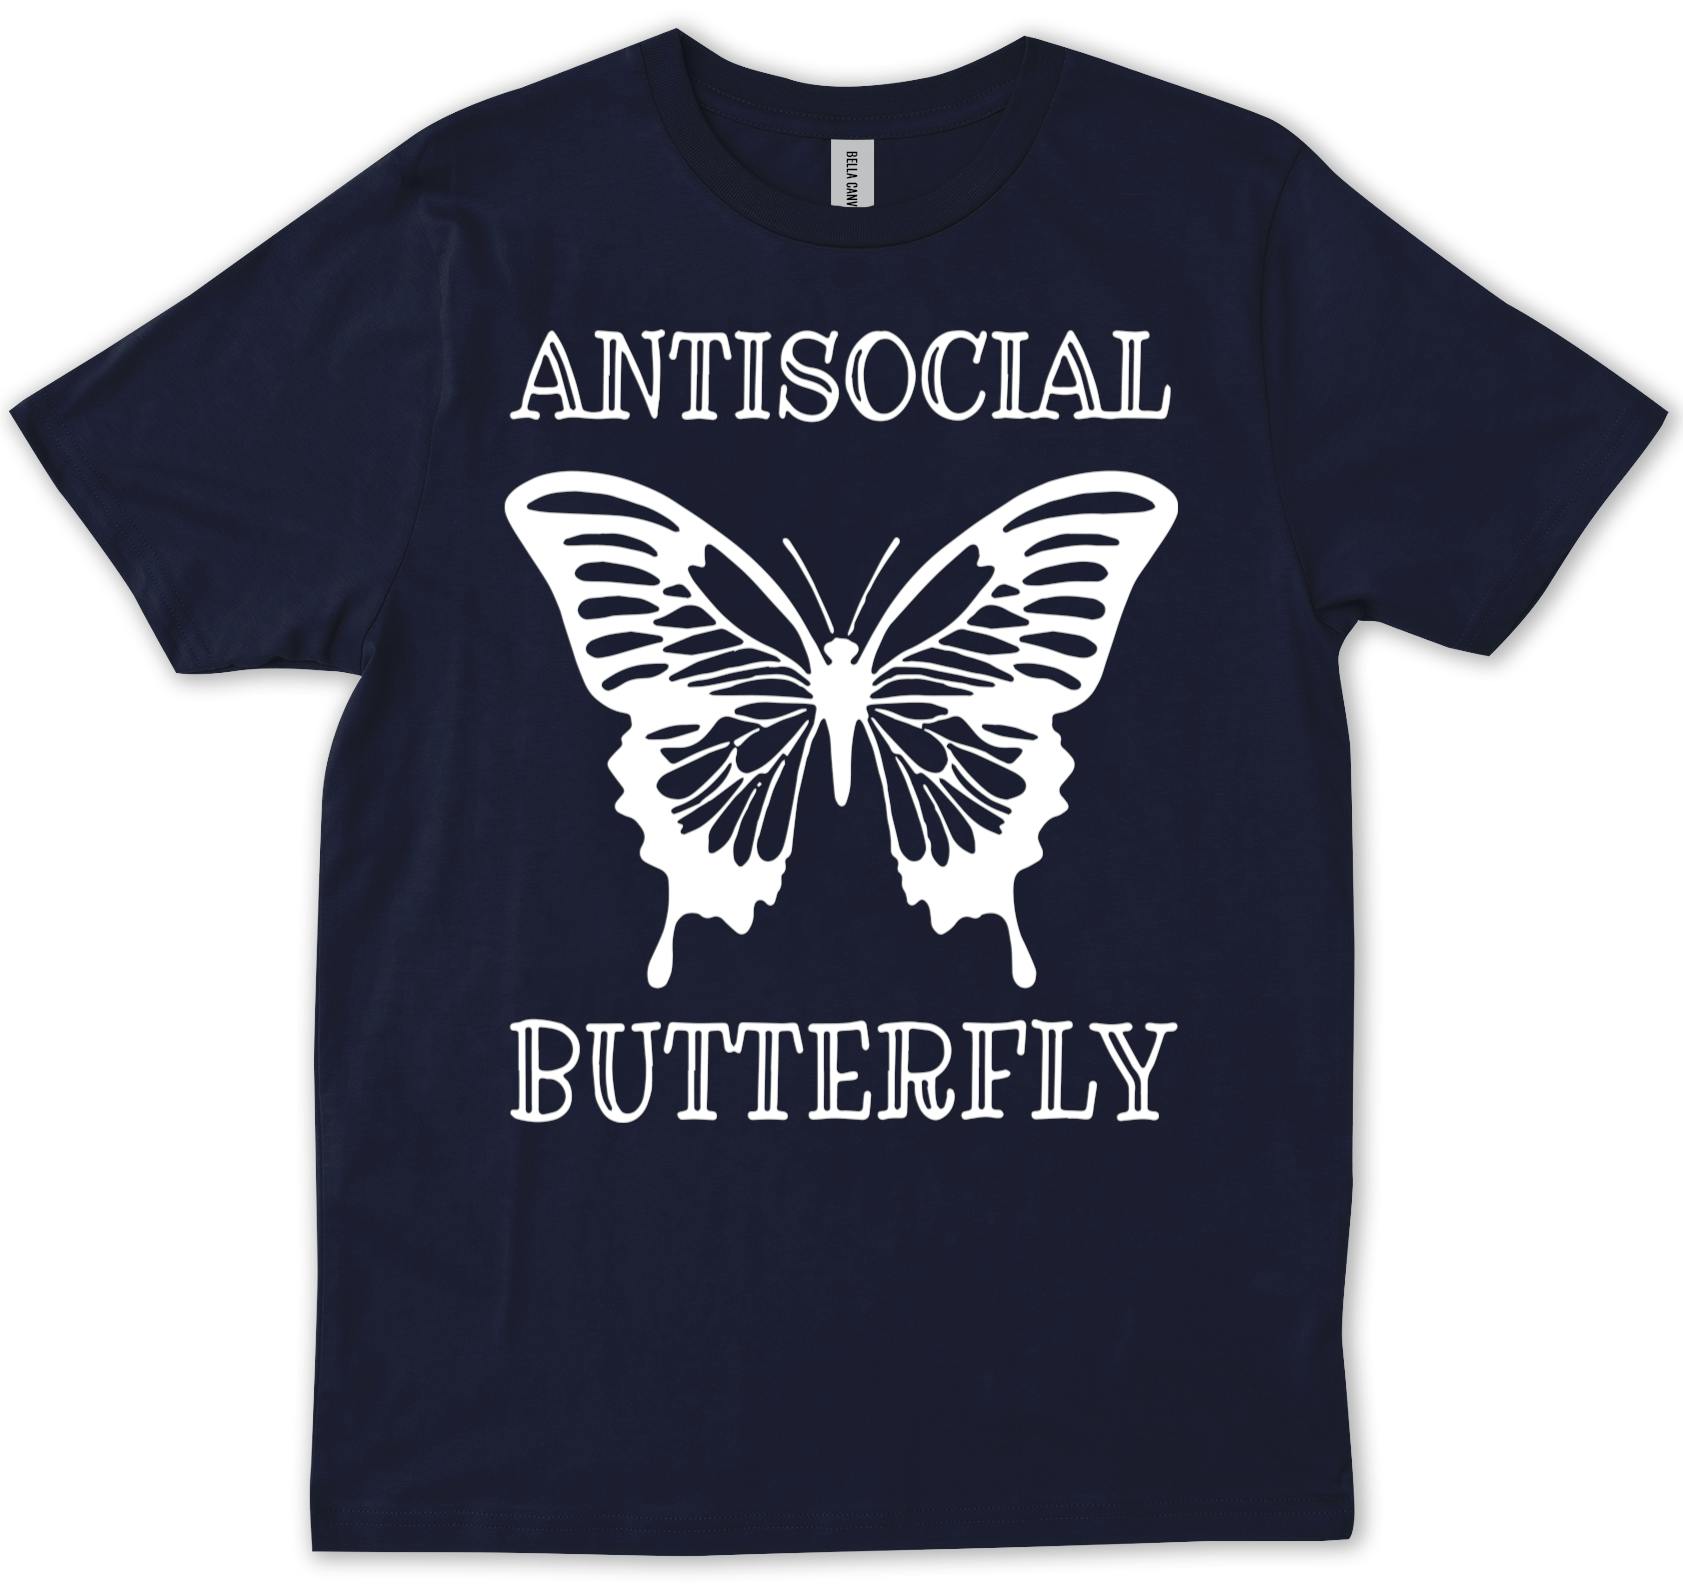 Antisocial Butterfly , #AntiSocial Anti Social Social, Anti Social, T-shirt  | eBay